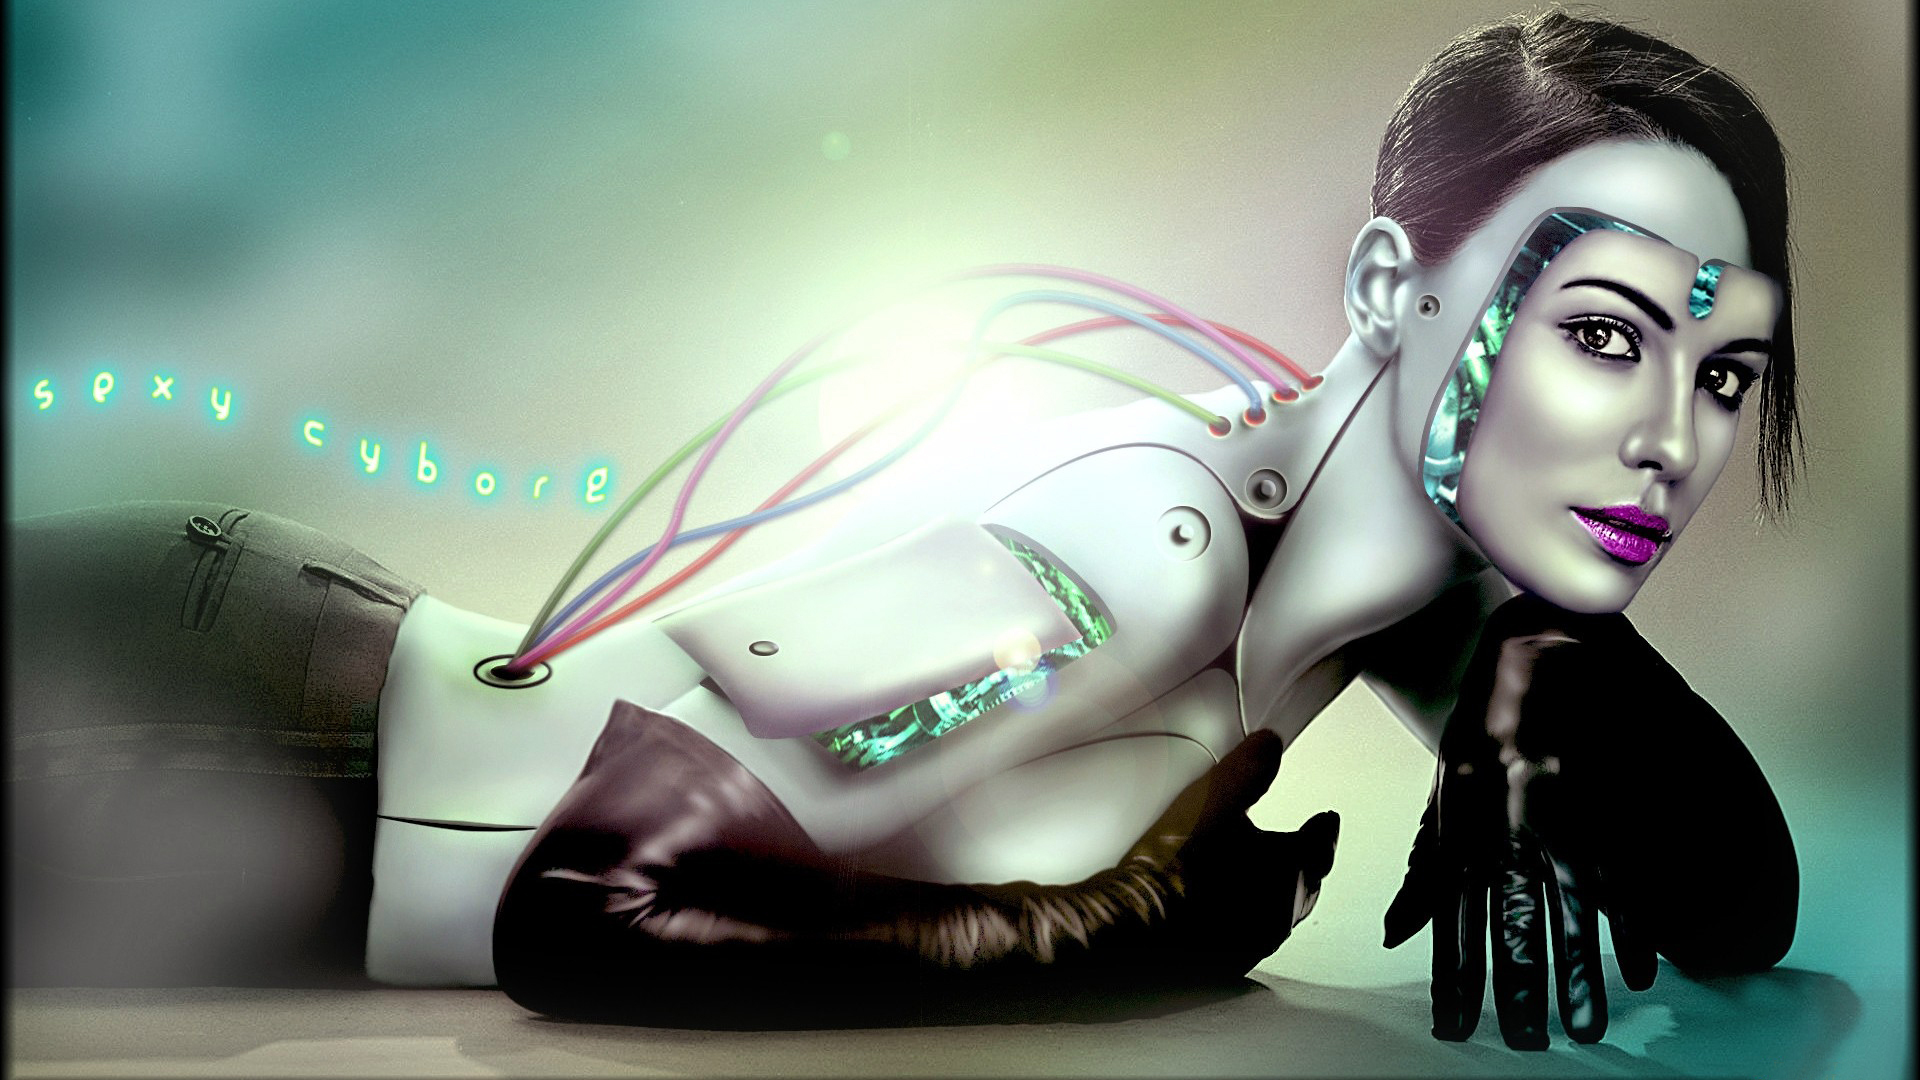 Sexy Cyborg Robot 3d Mask Fantasy Digital Art Desktop Wallpaper